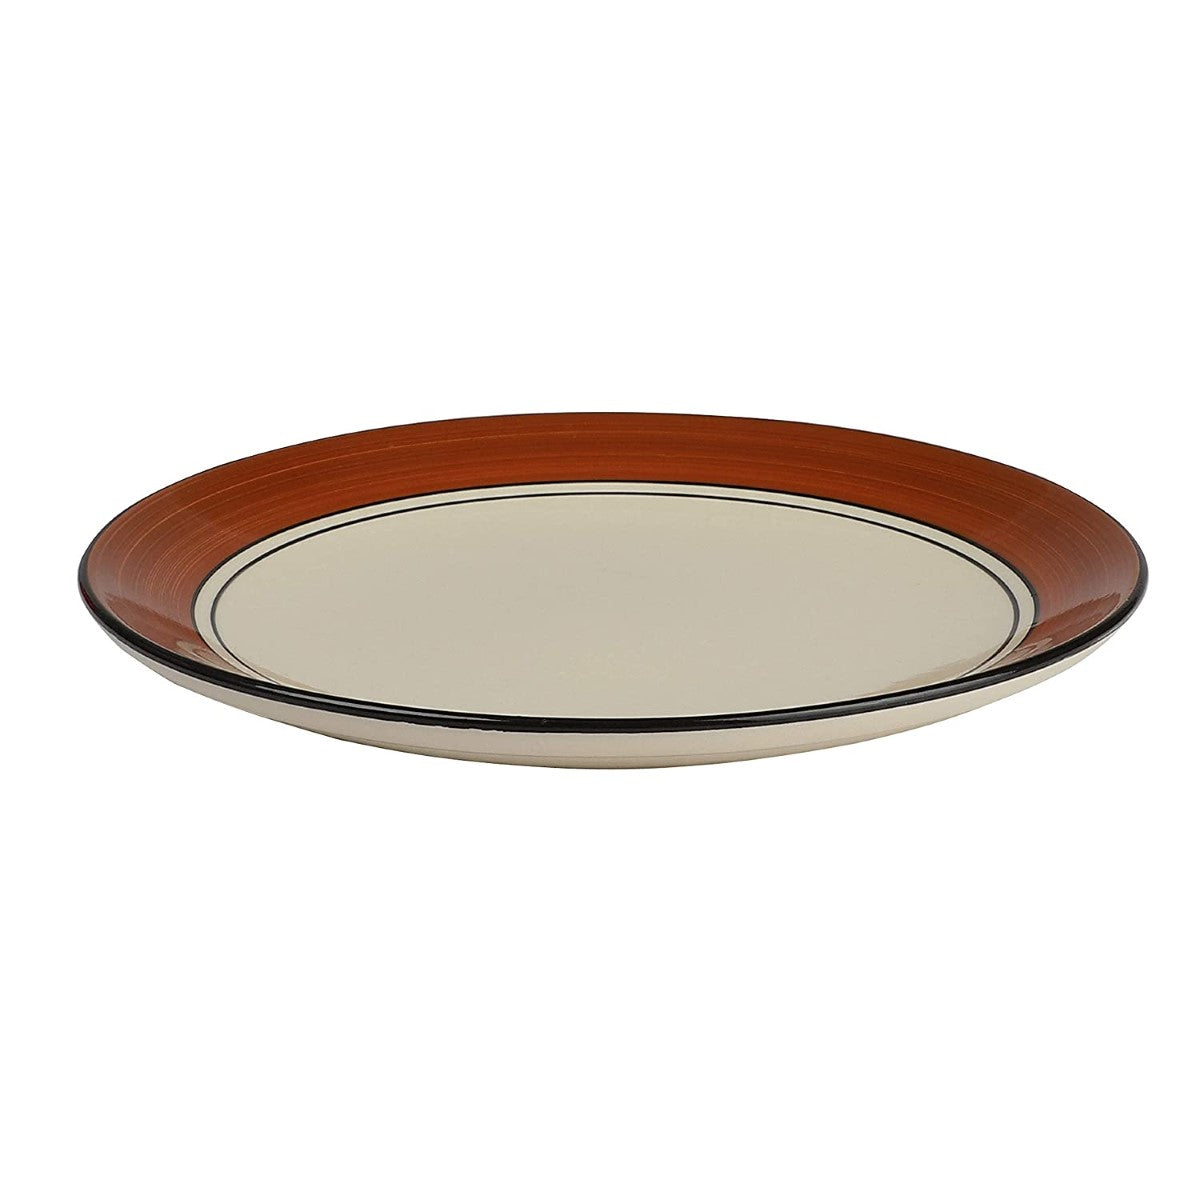 Cream & Brown Handpainted Ceramic Dinner Plates (Set of 2)